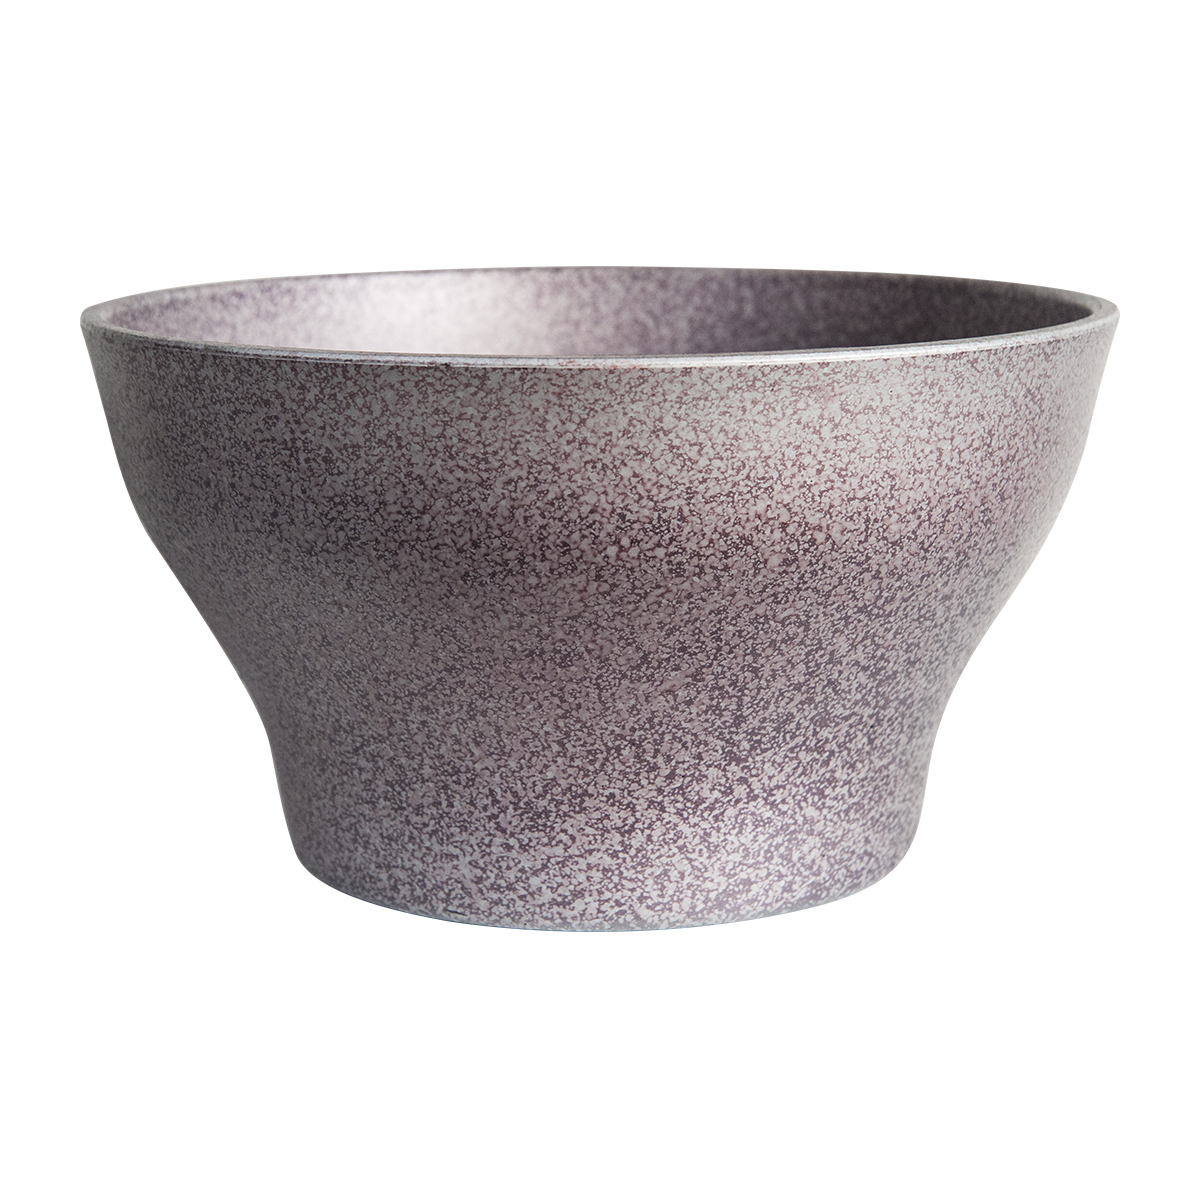 Poly Resin Decorative Speckle Bowl Planter